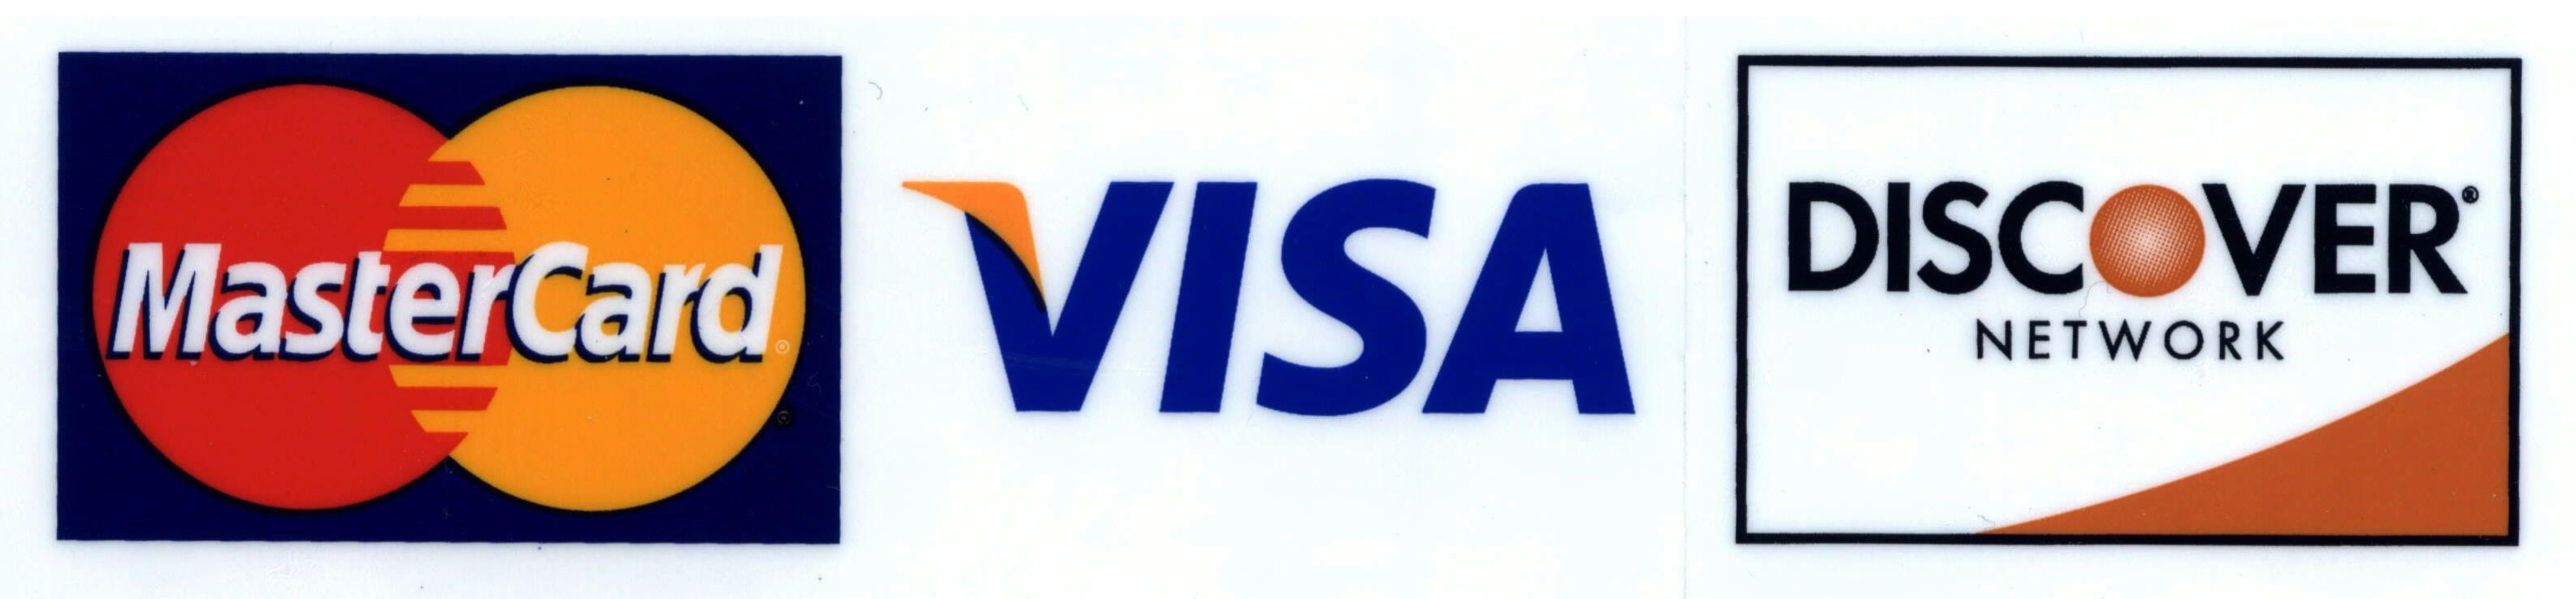 Visa MasterCard Discover Logo - 9 Discover Credit Card Logo Vector Images - Credit Card Logos, Visa ...